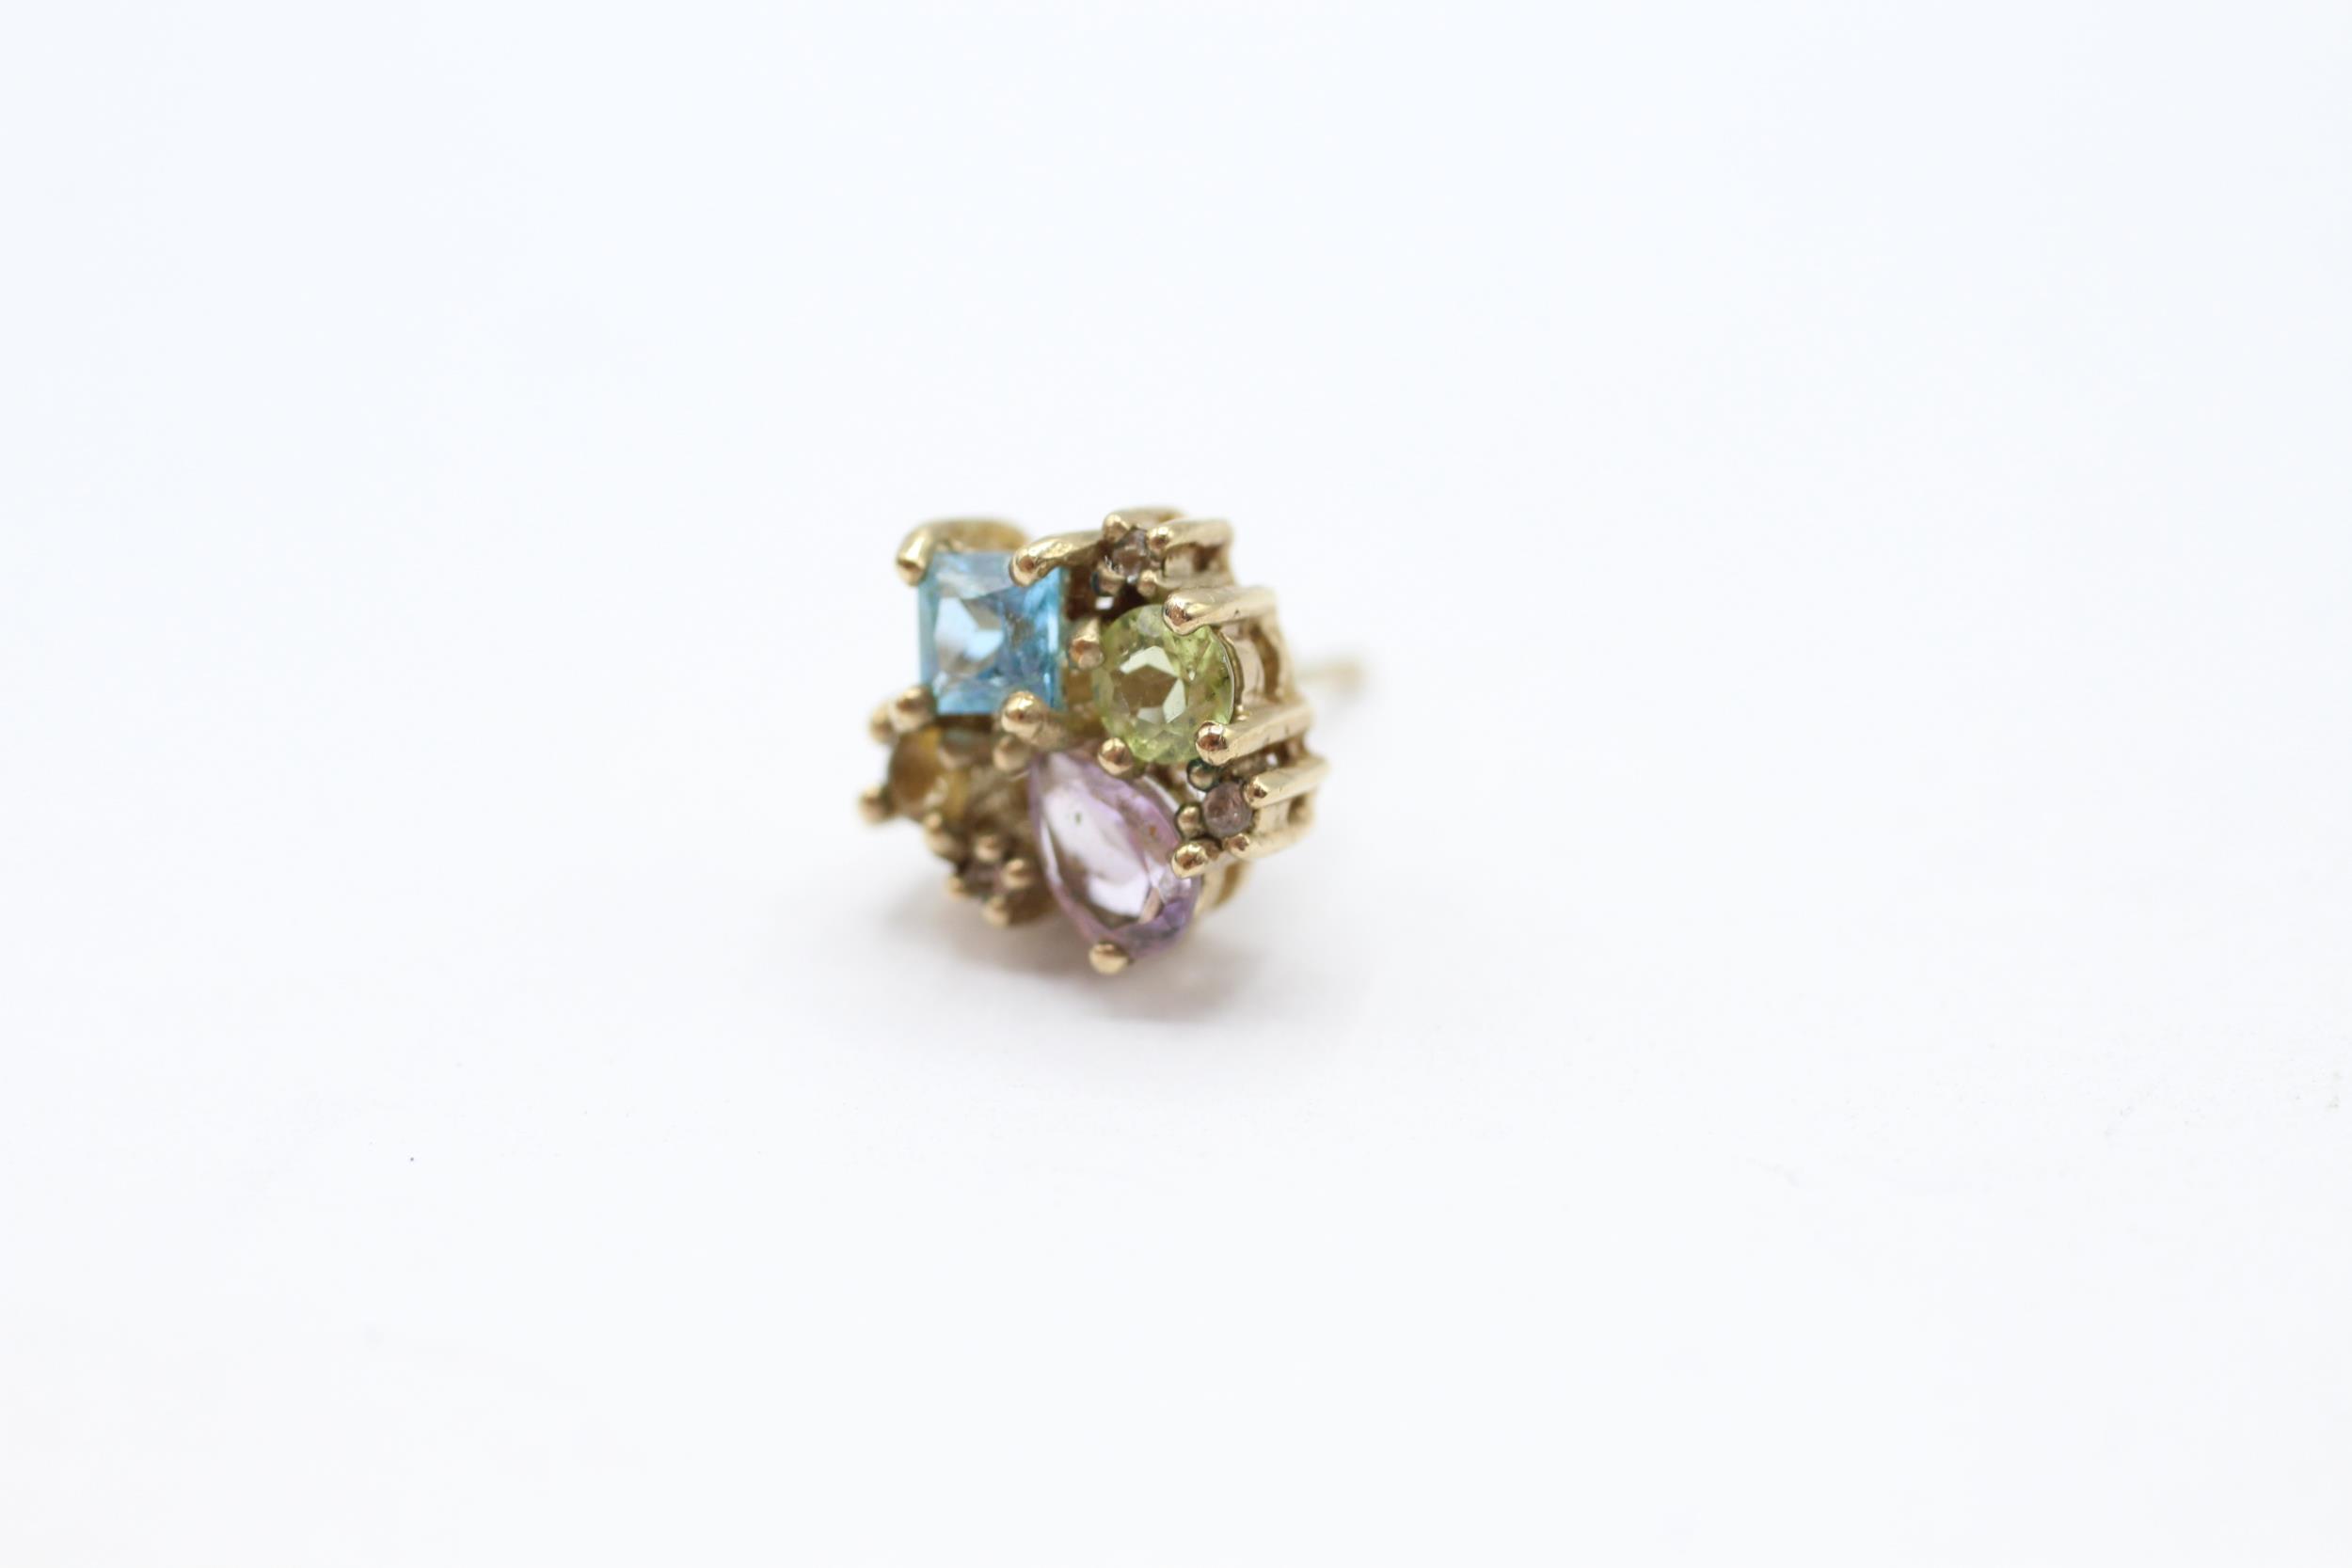 9ct gold multi gemstone cluster stud earrings, gemstones including: amethyst, topaz, citrine, - Image 3 of 4